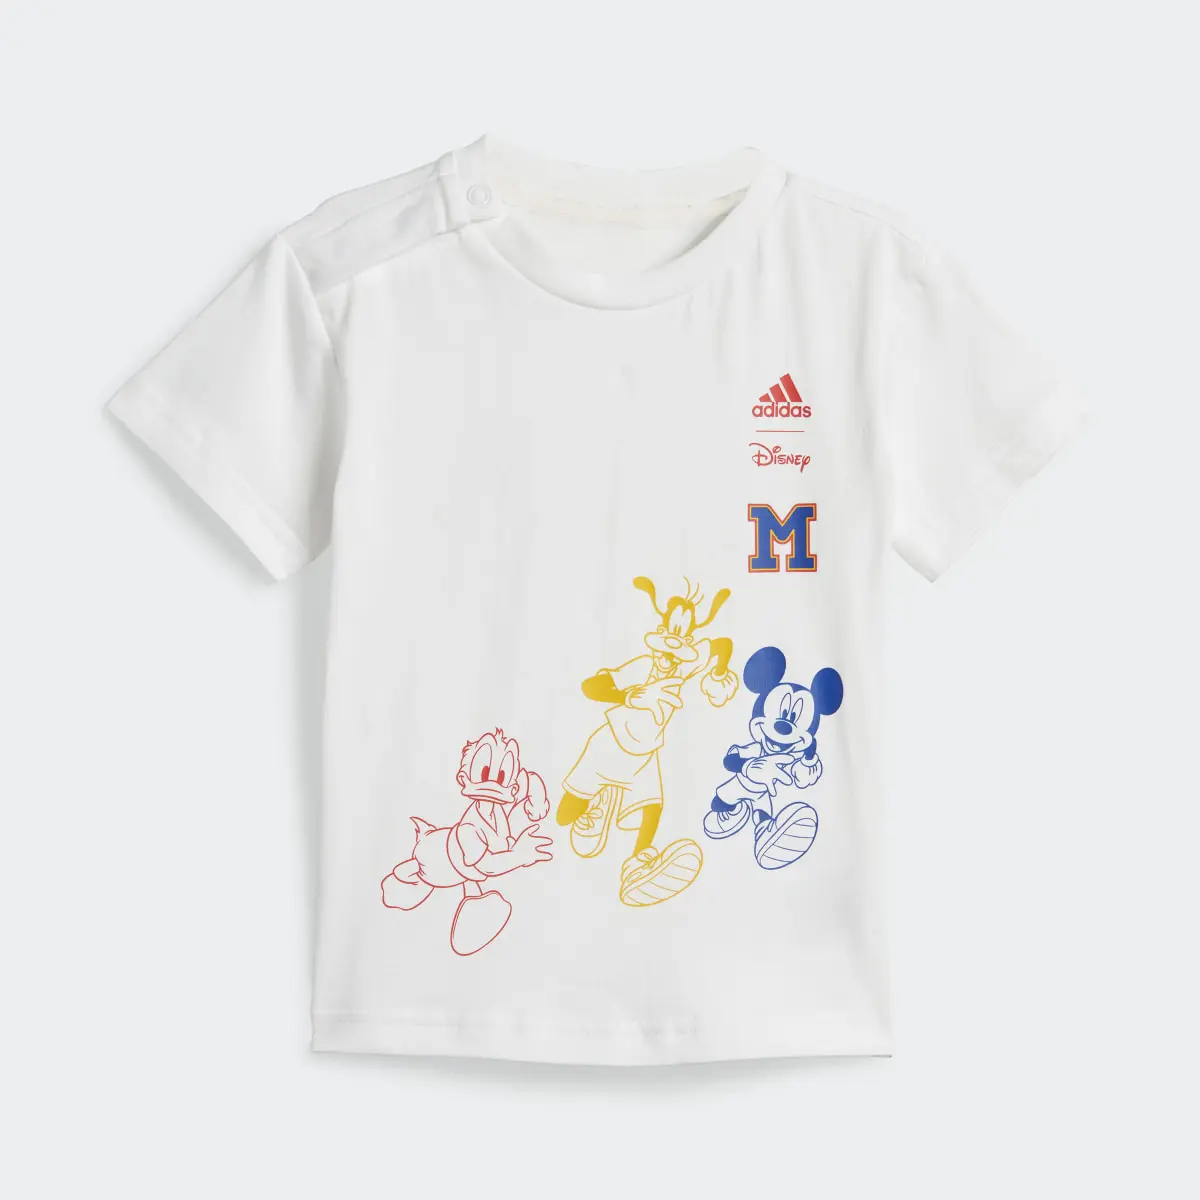 Adidas x Disney Mickey Mouse Tişört ve Şort Takımı. 3